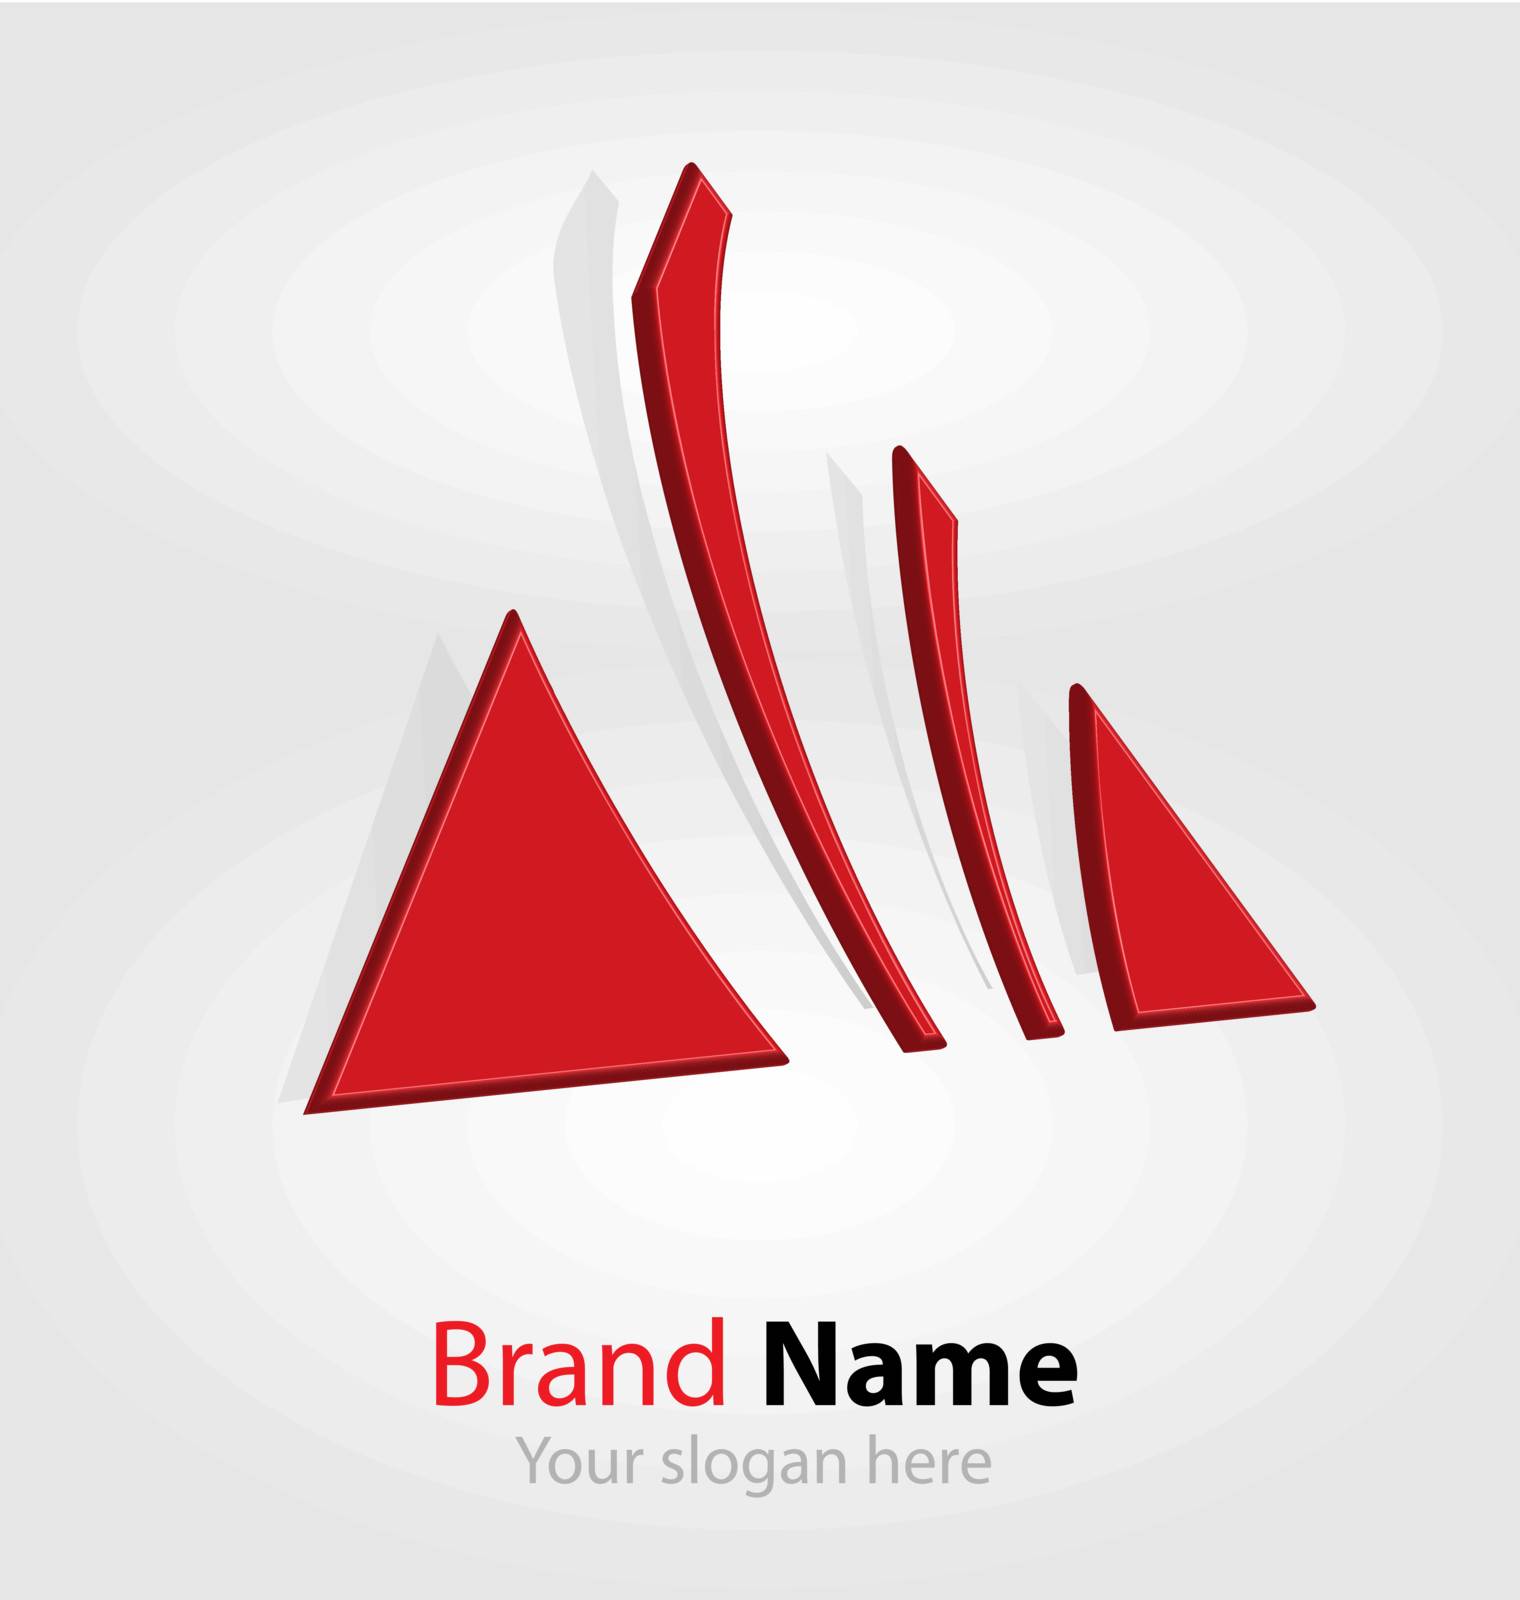 Originally designed abstract brand logo/logotype